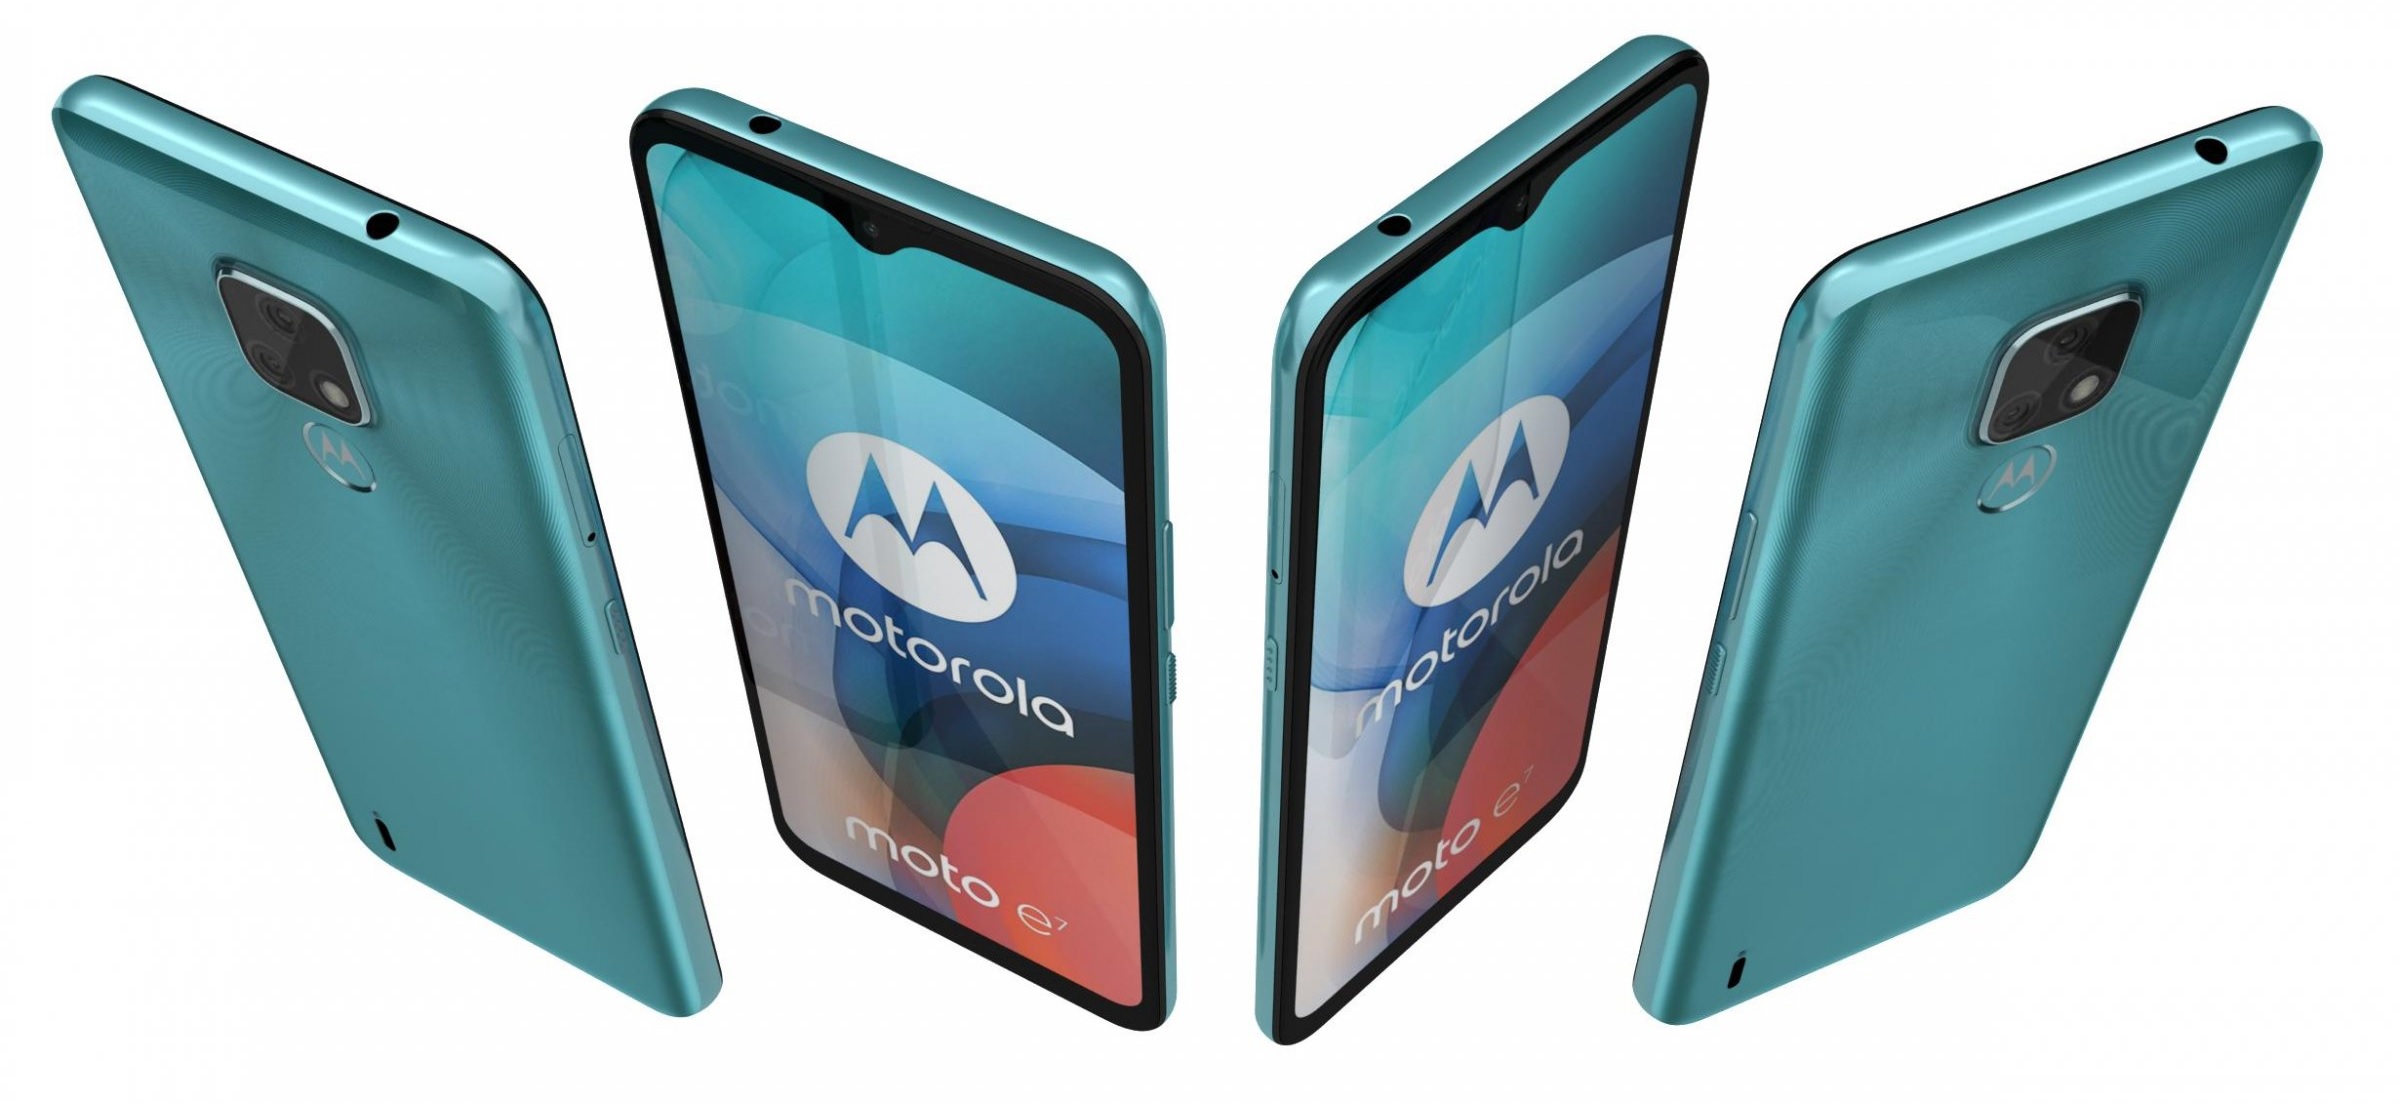 Motorola Moto E7 2GB / 32GB Aqua Blue